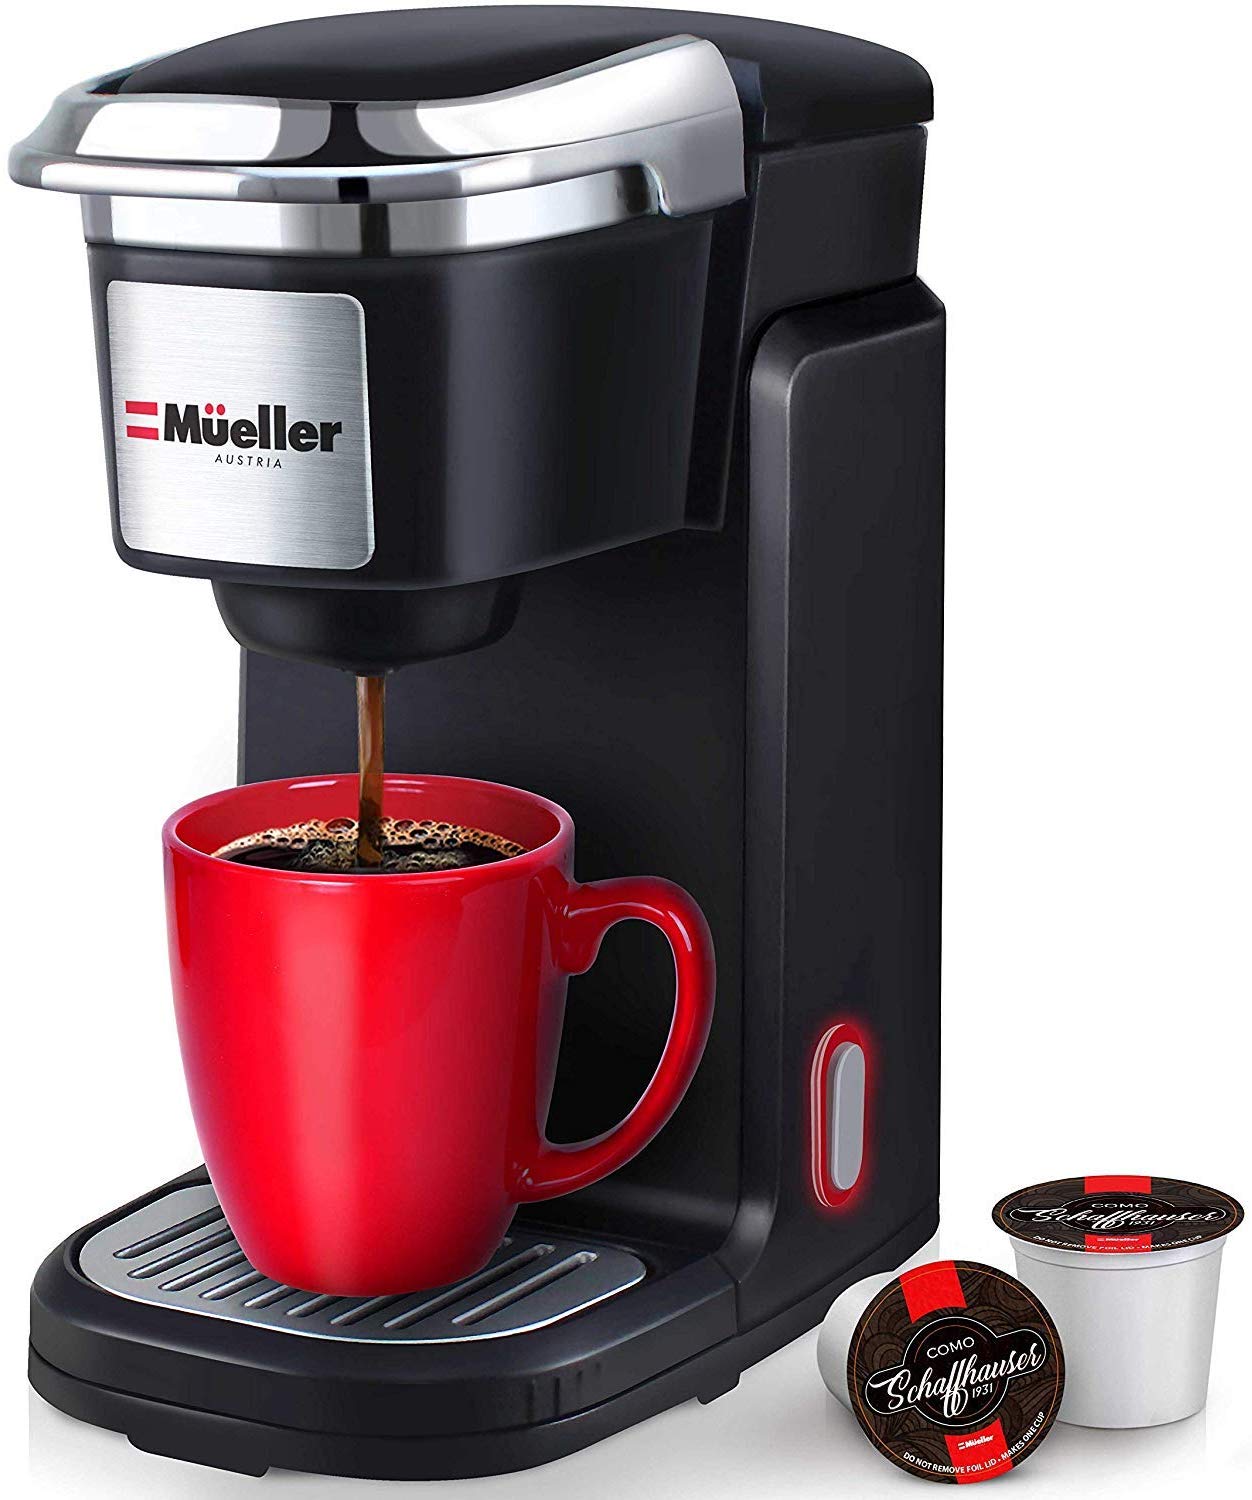 Mueller Austria + Barista Pro Single Serve Brewer 10oz Coffee Maker